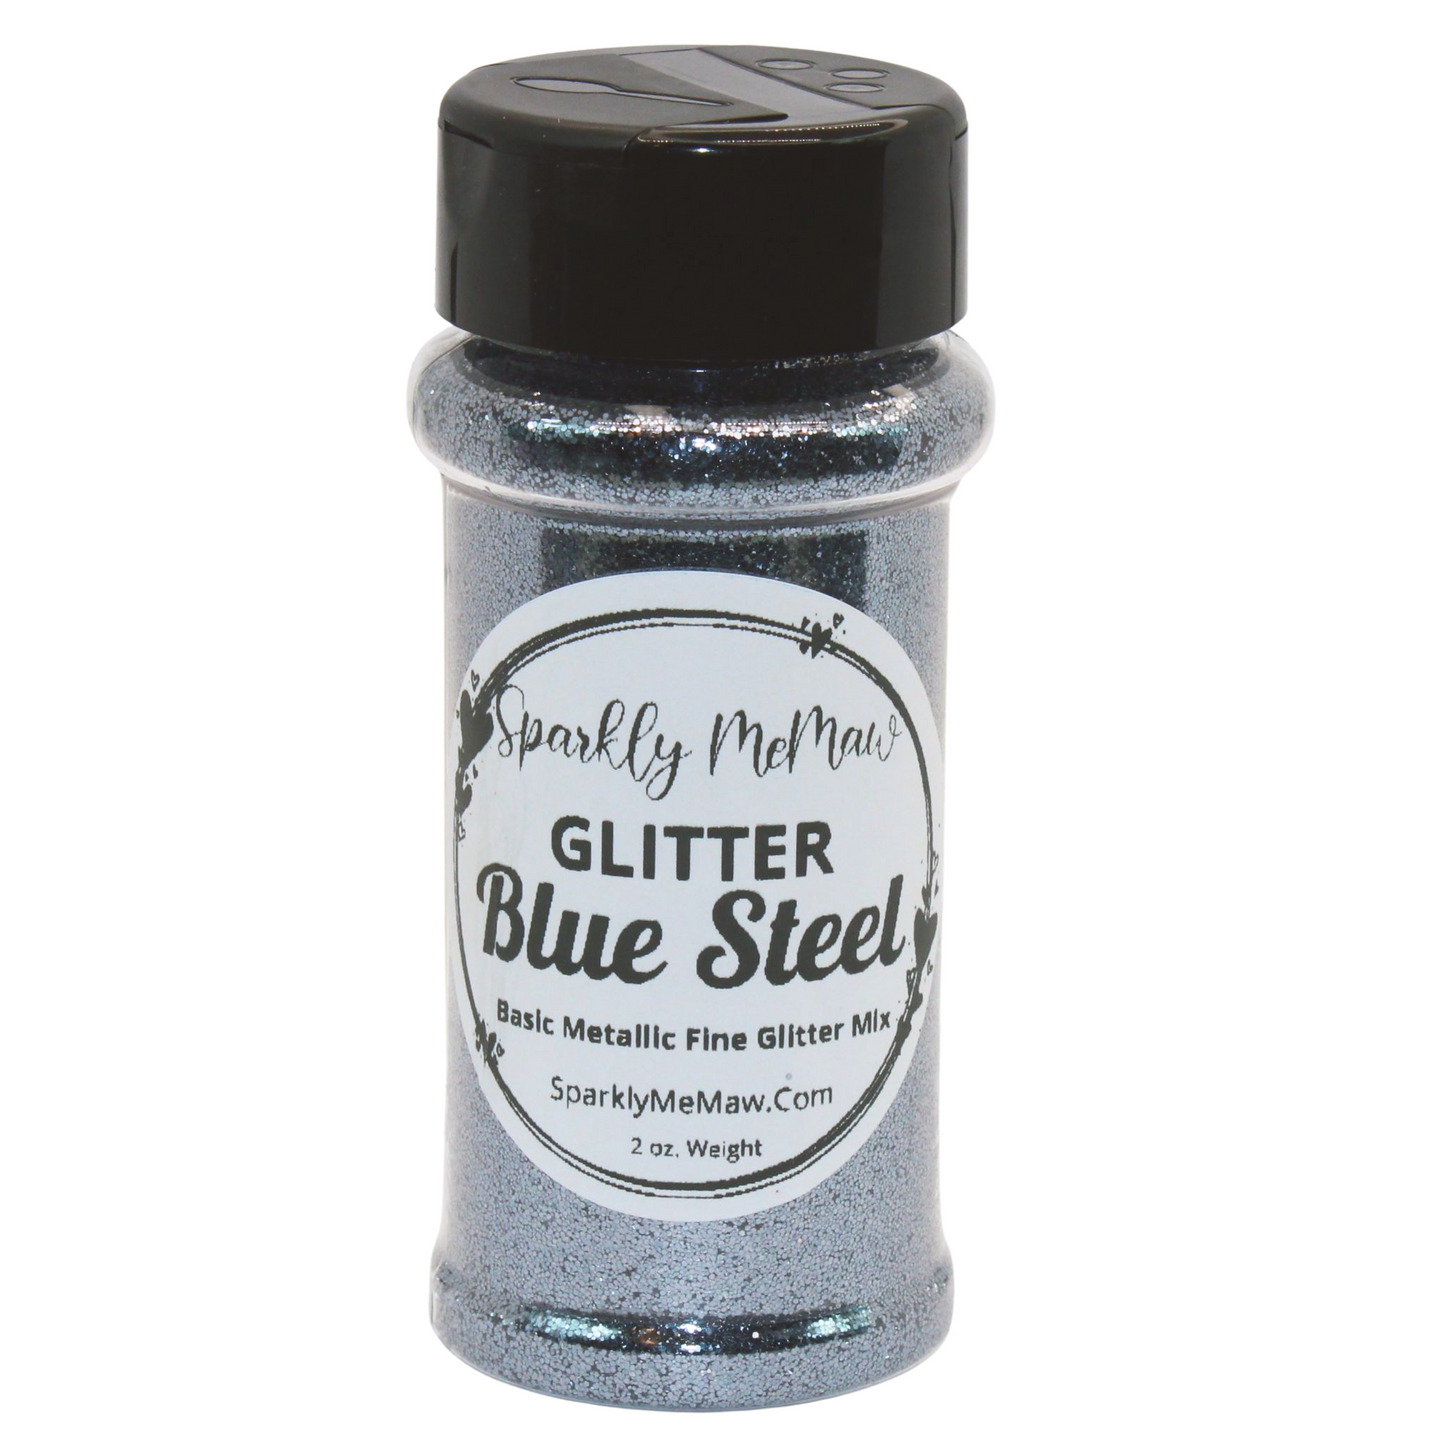 Blue Steel Basic Metallic Fine Glitter Mix